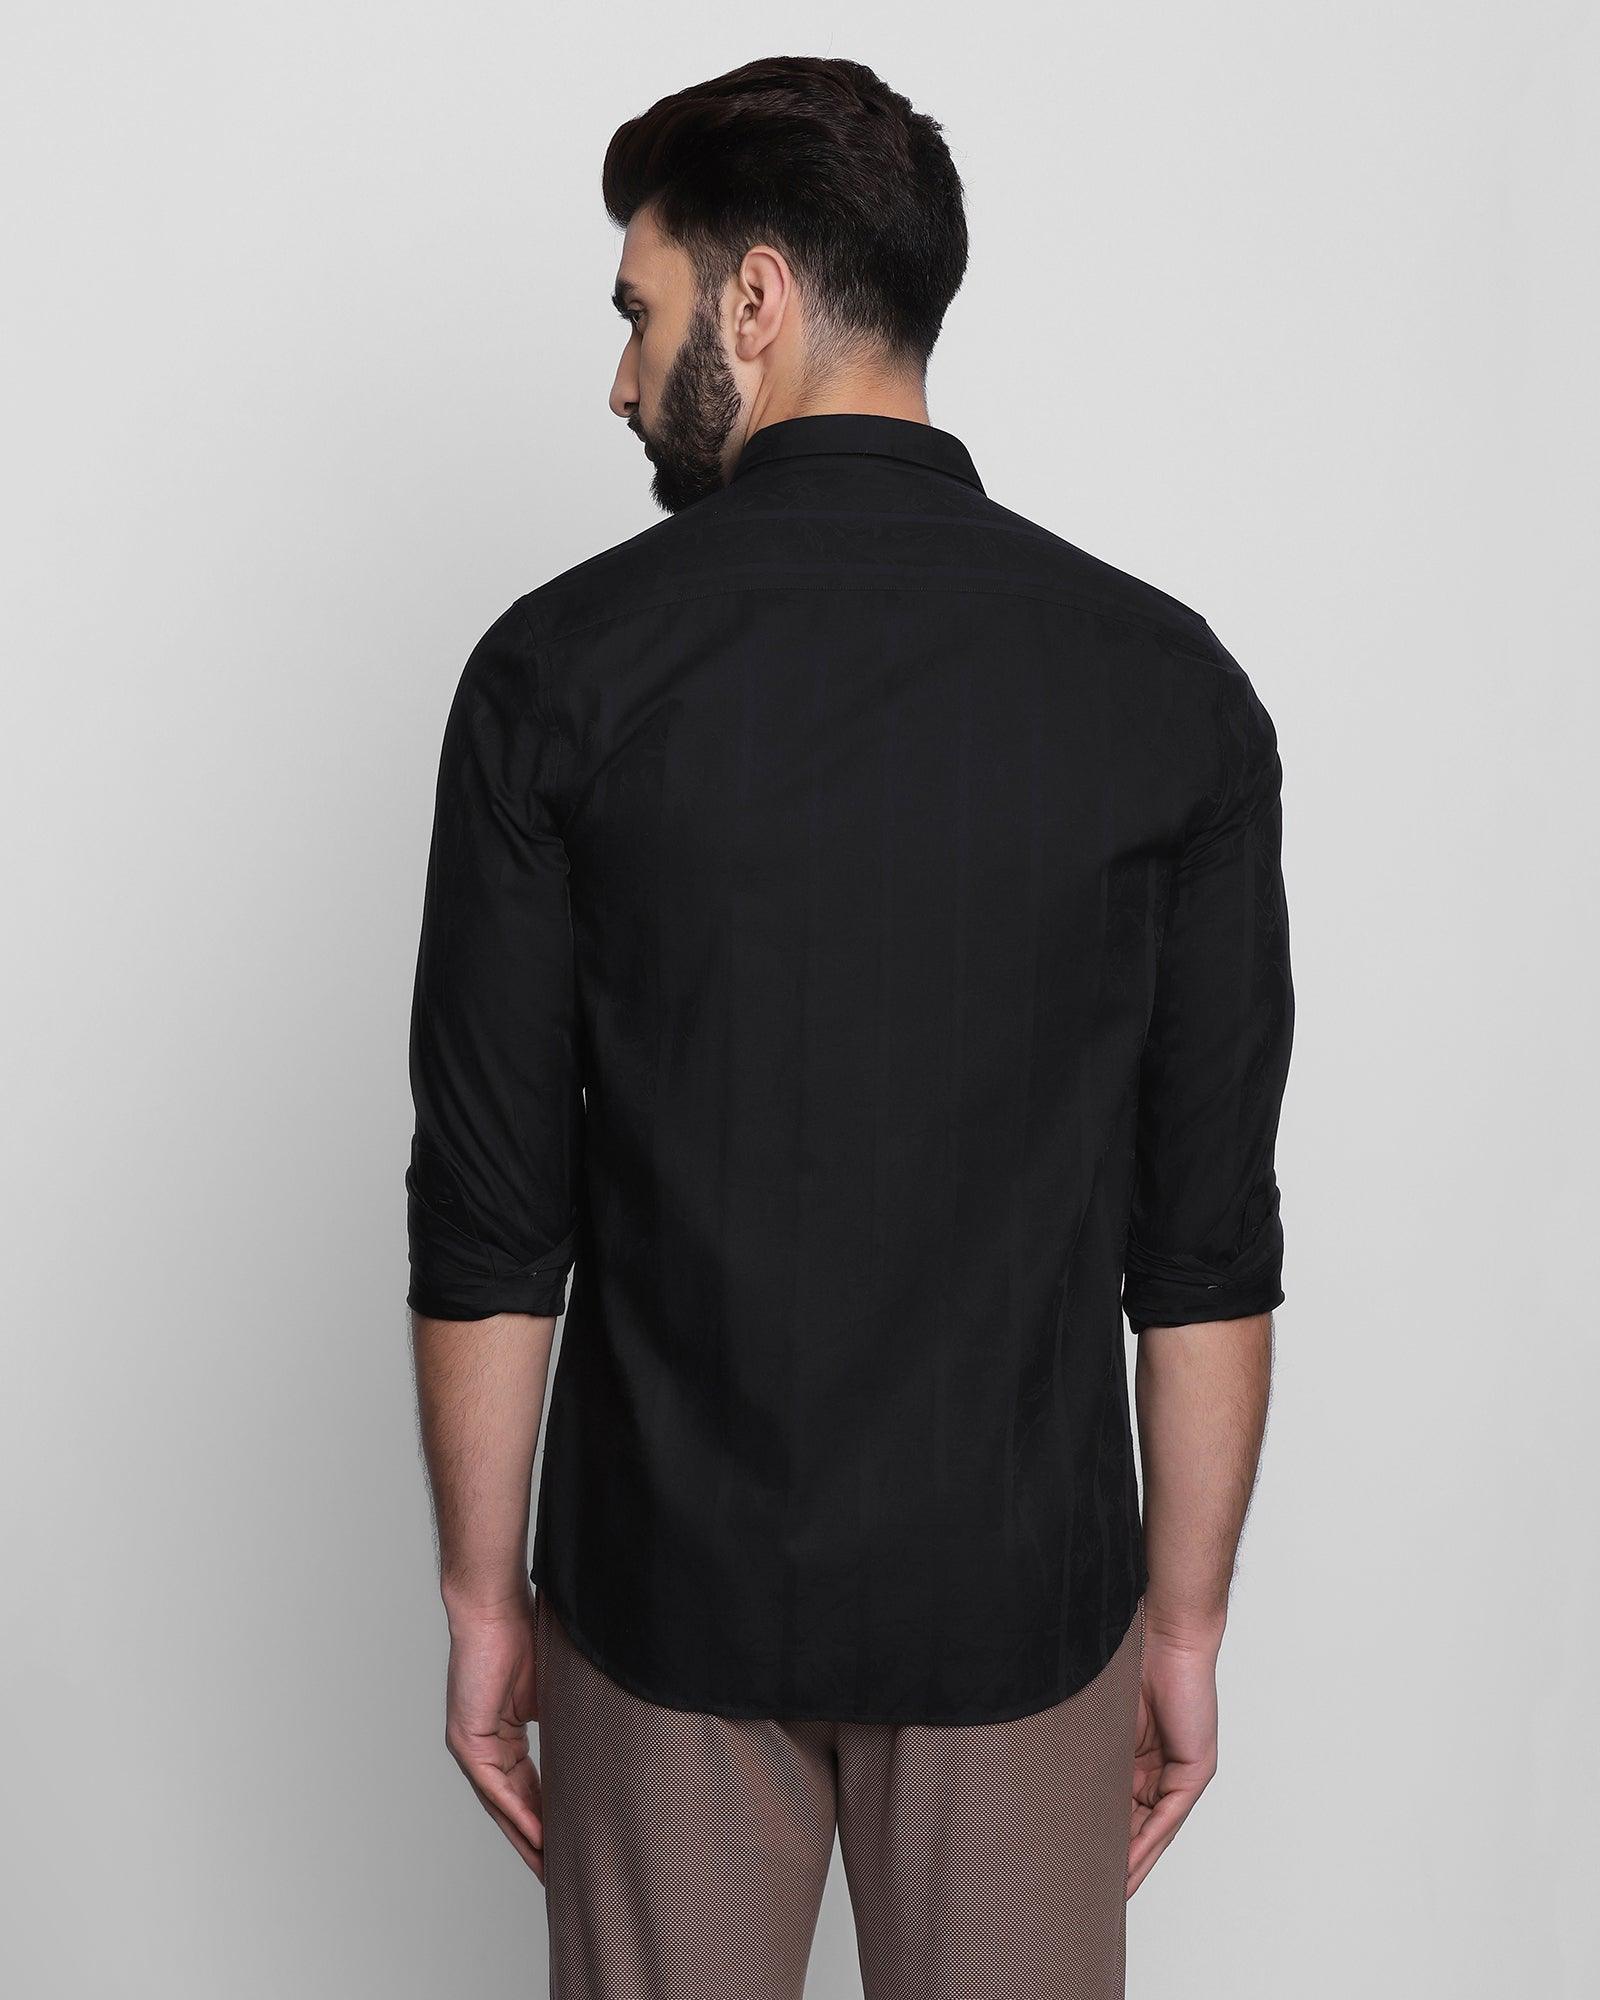 Casual Black Solid Shirt - Davis